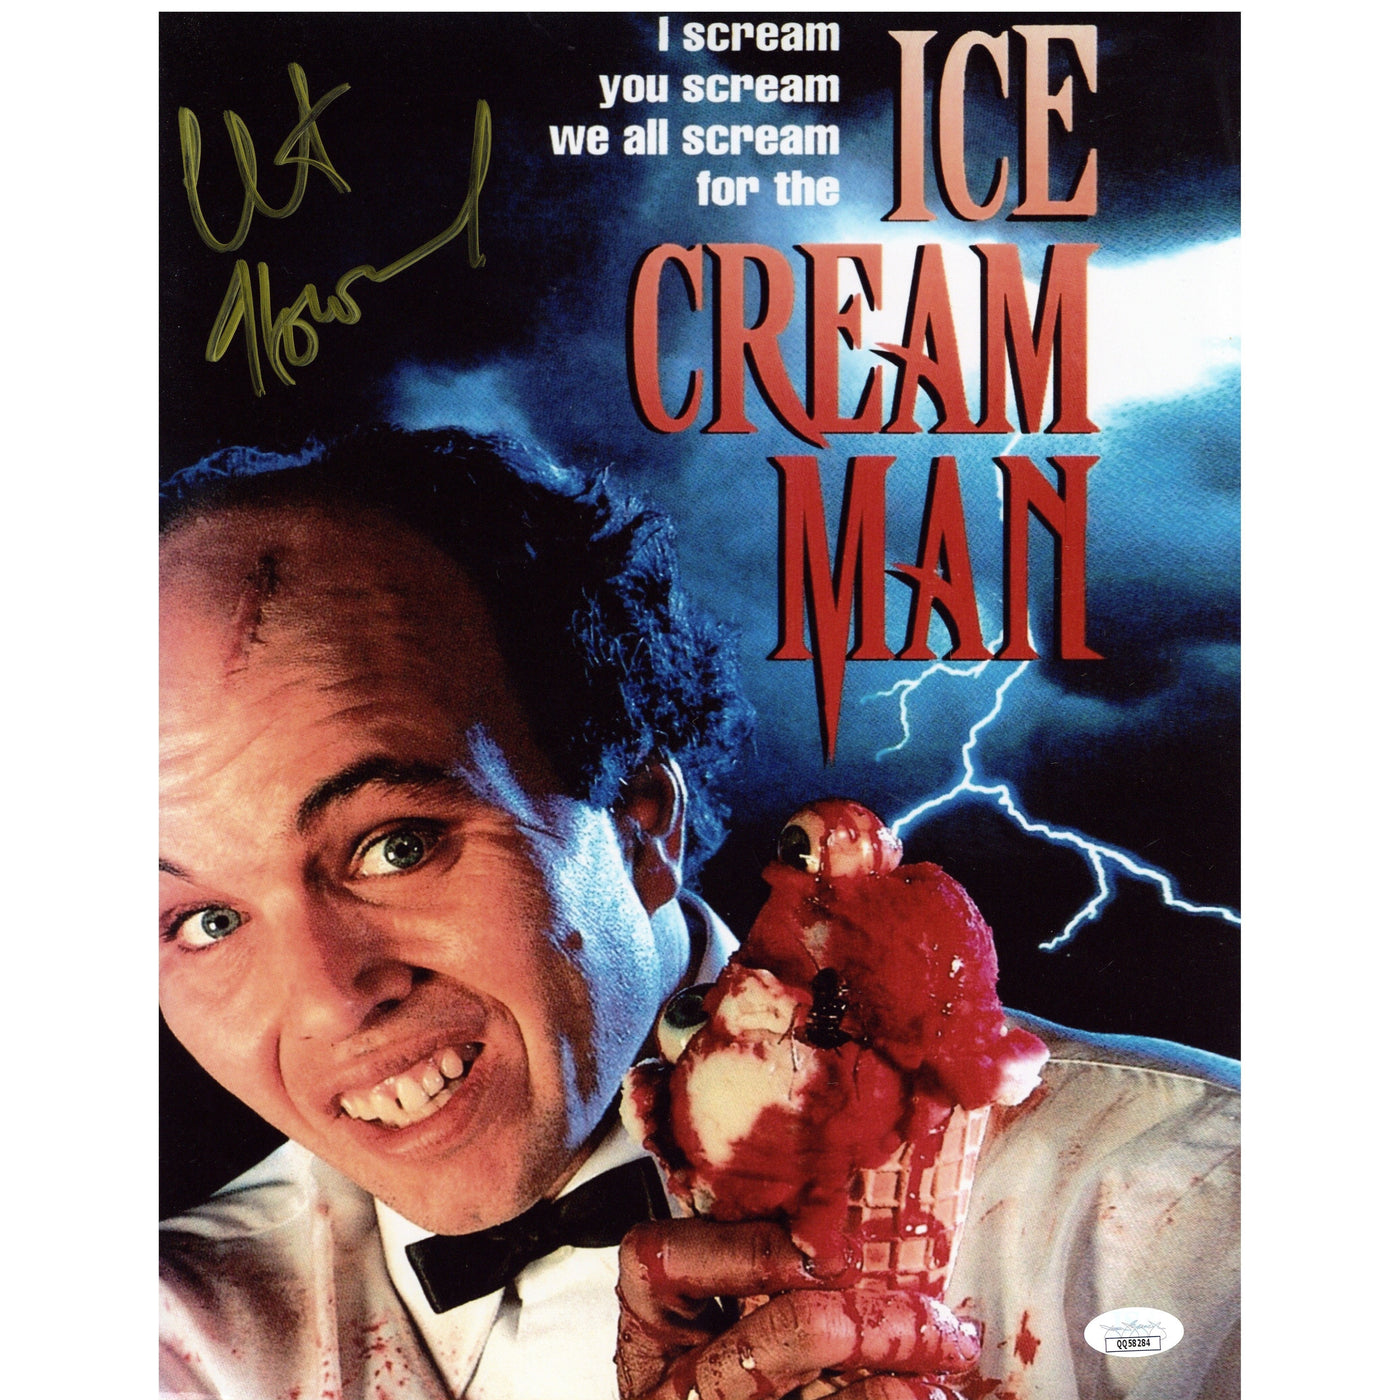 Clint Howard Autographed 11x14 Photo Ice Cream Man Signed JSA COA Z1